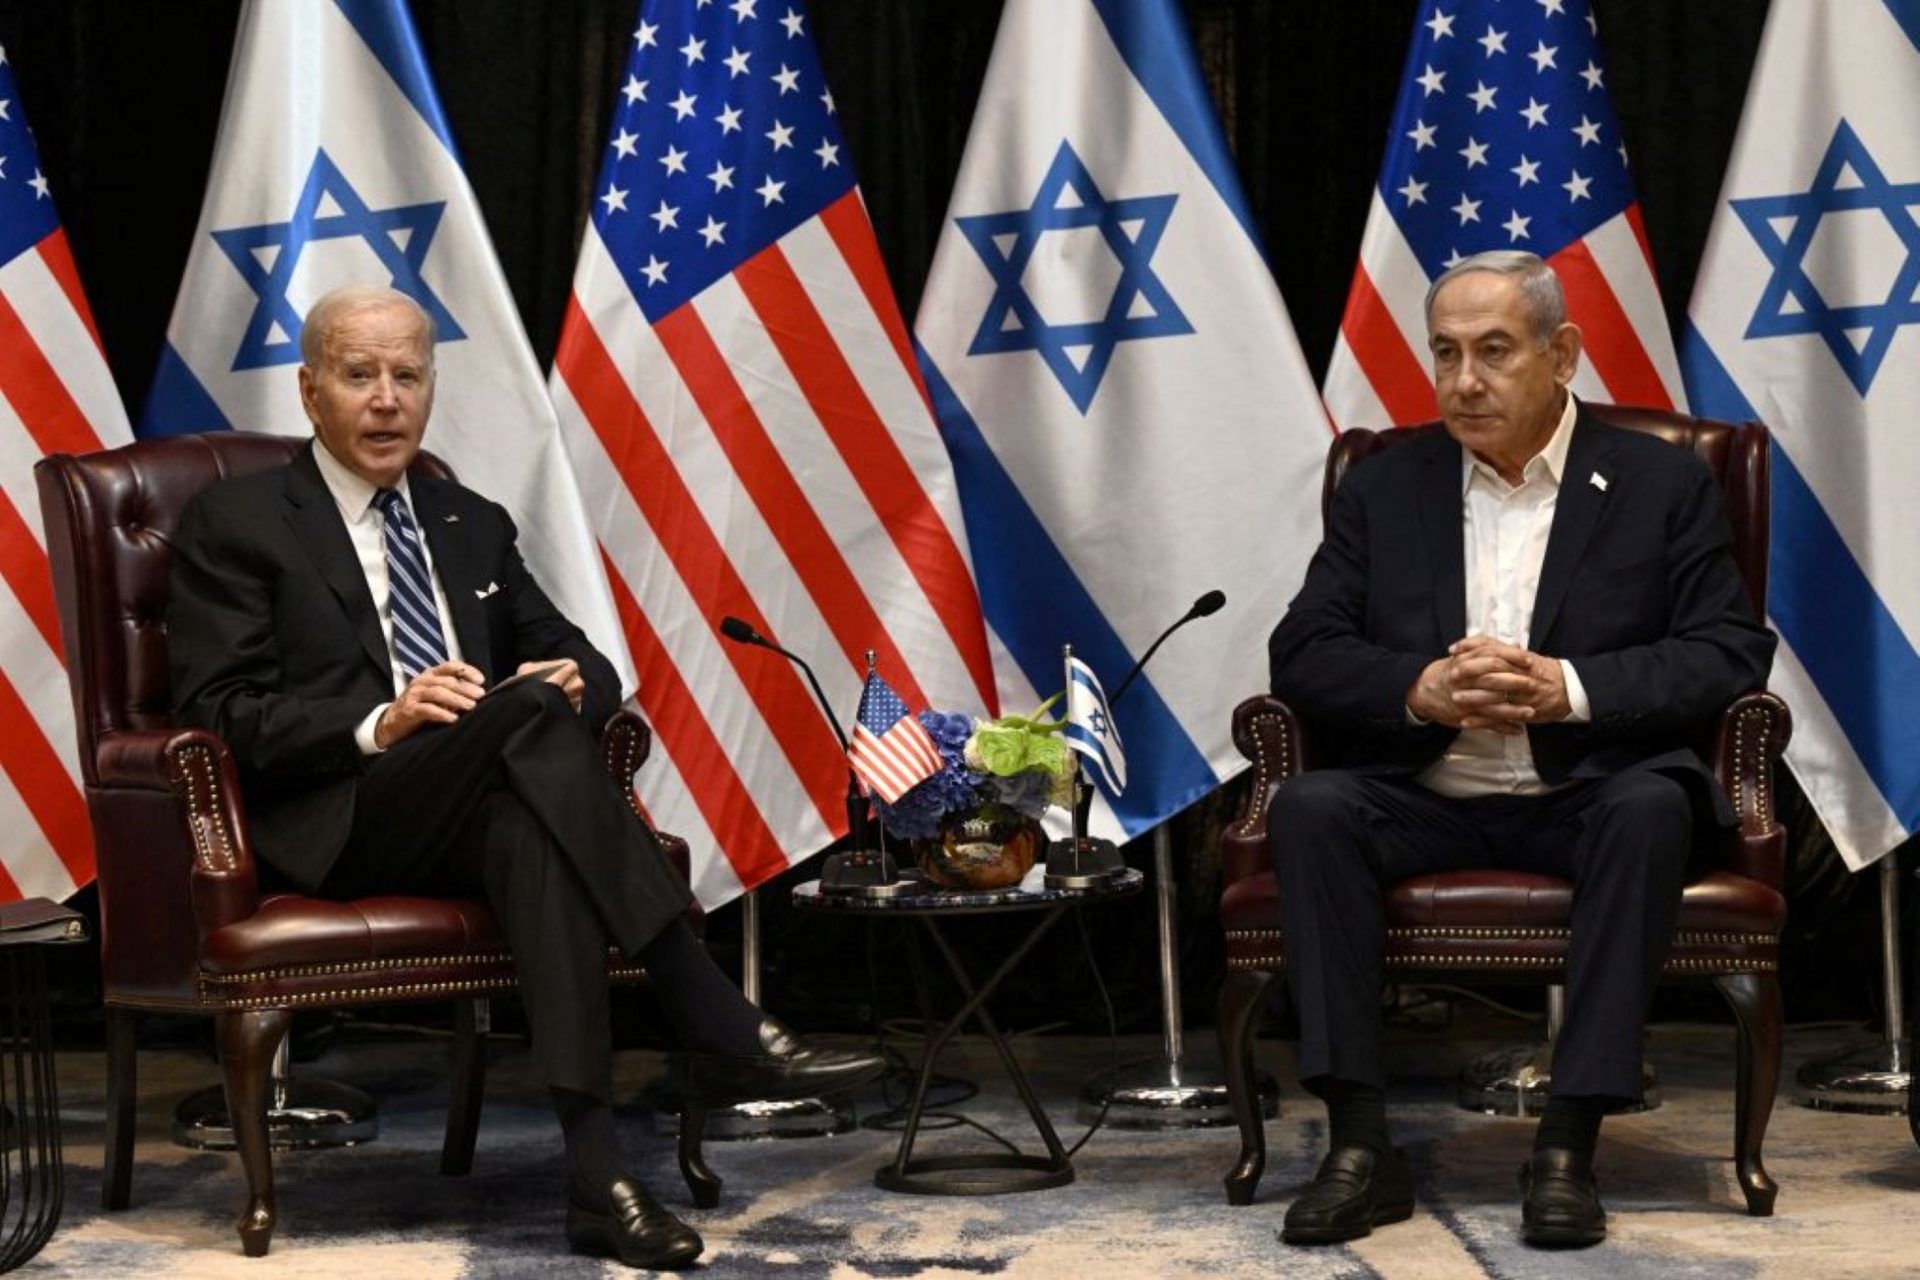 Biden stands with Israel